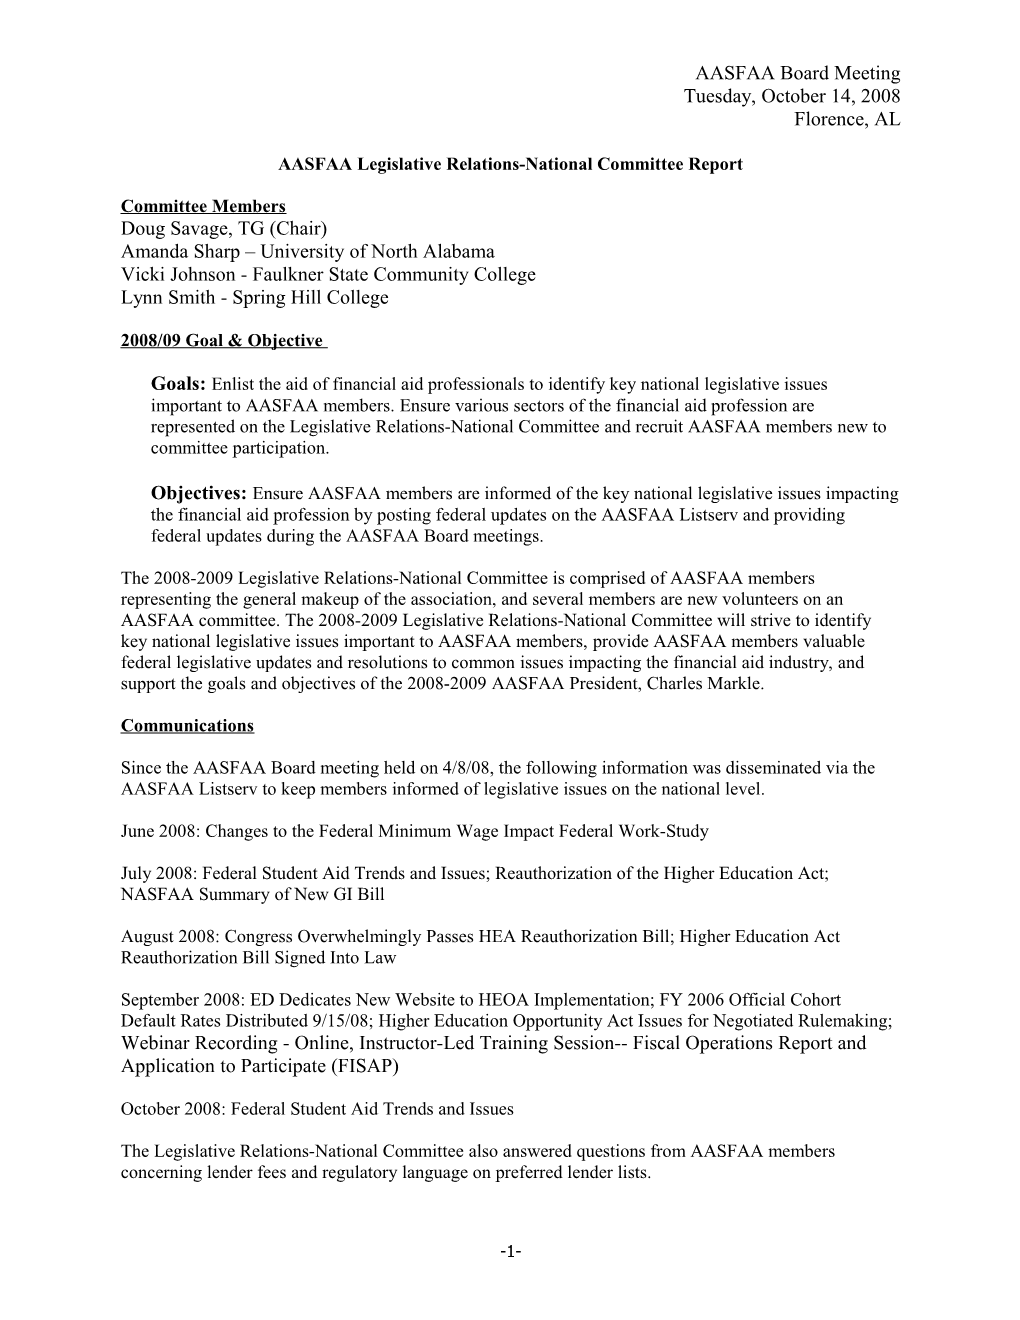 AASFAA Legislative Relations-National Committee Report